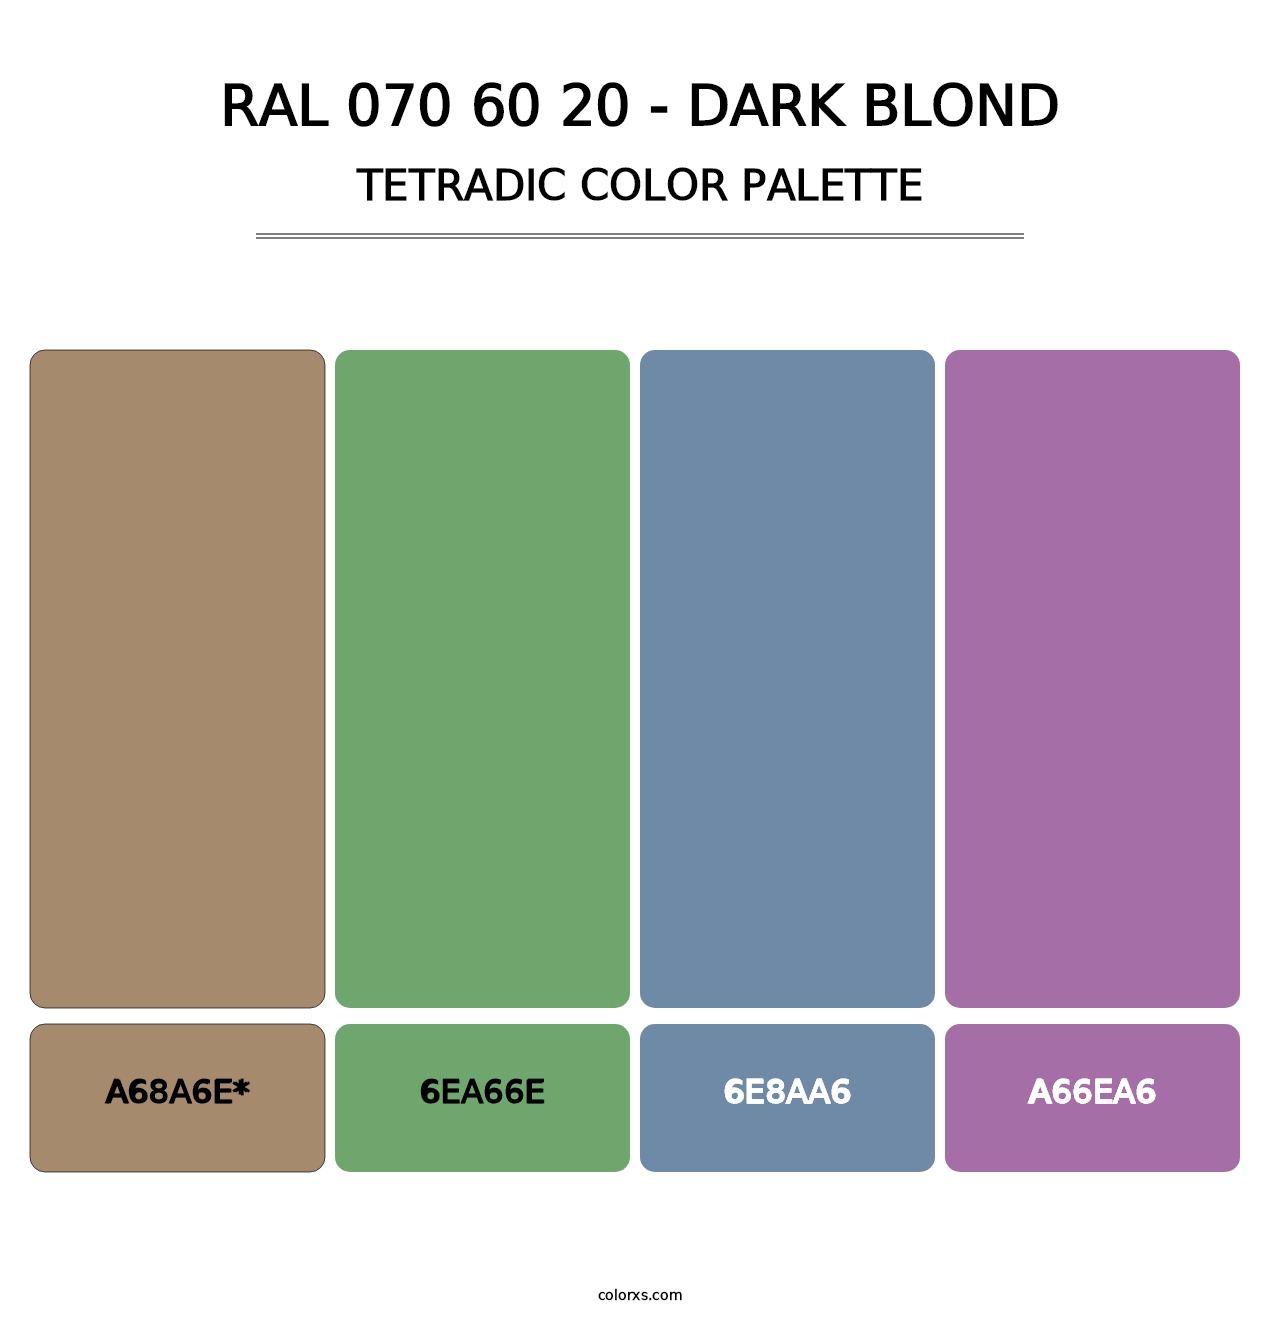 RAL 070 60 20 - Dark Blond - Tetradic Color Palette